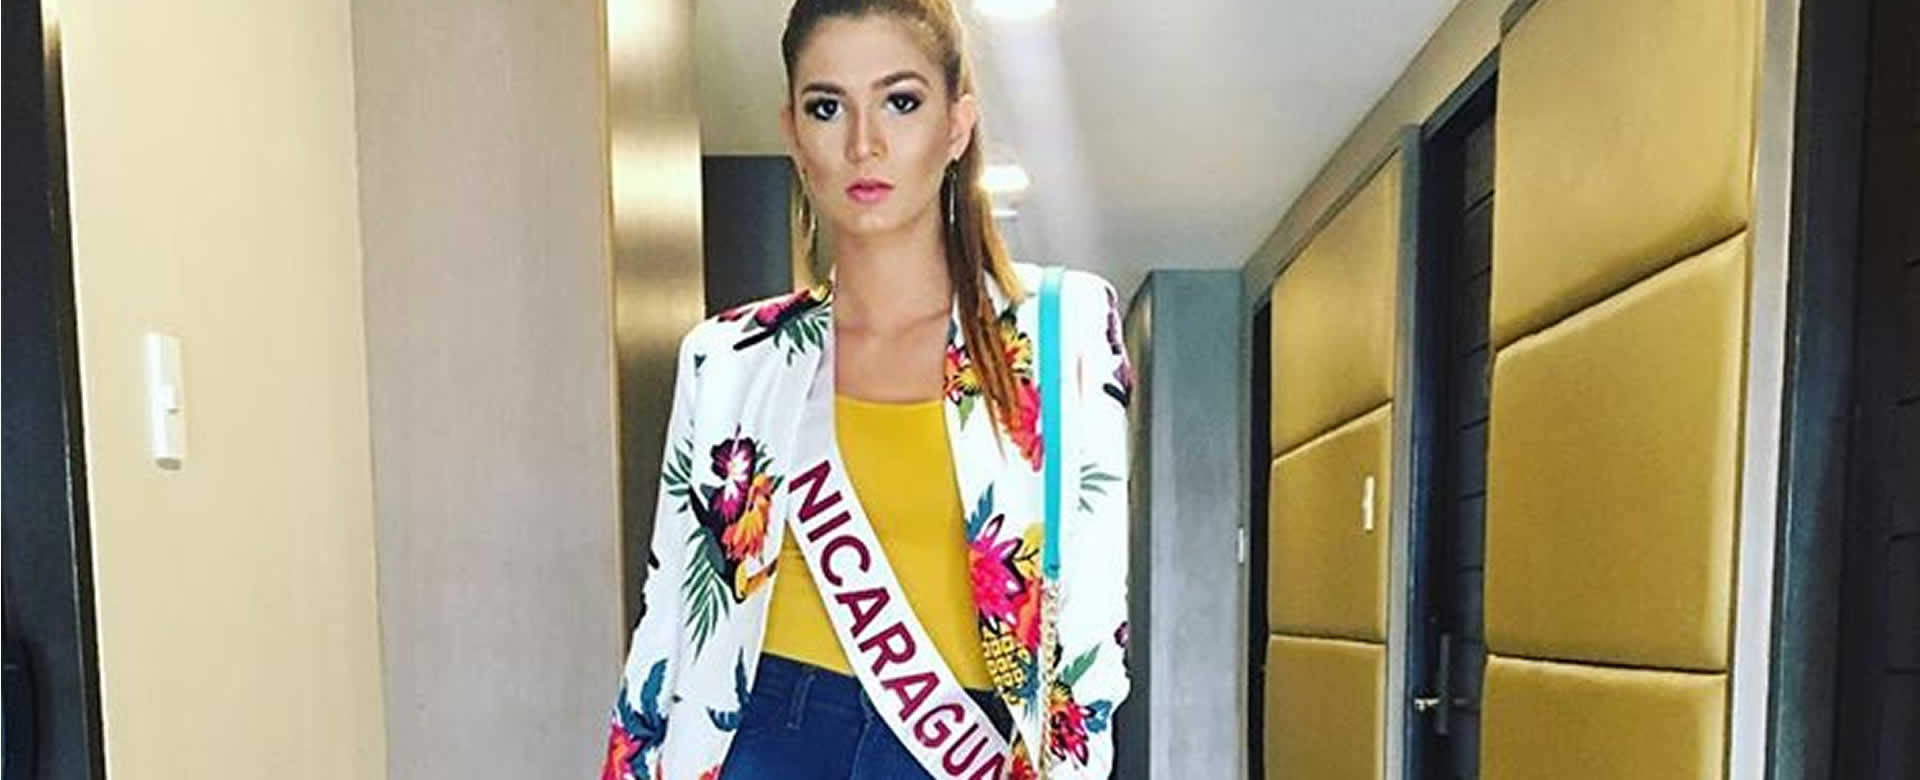 Kathering Medina: “Volver a Miss Nicaragua otra vez ya no”